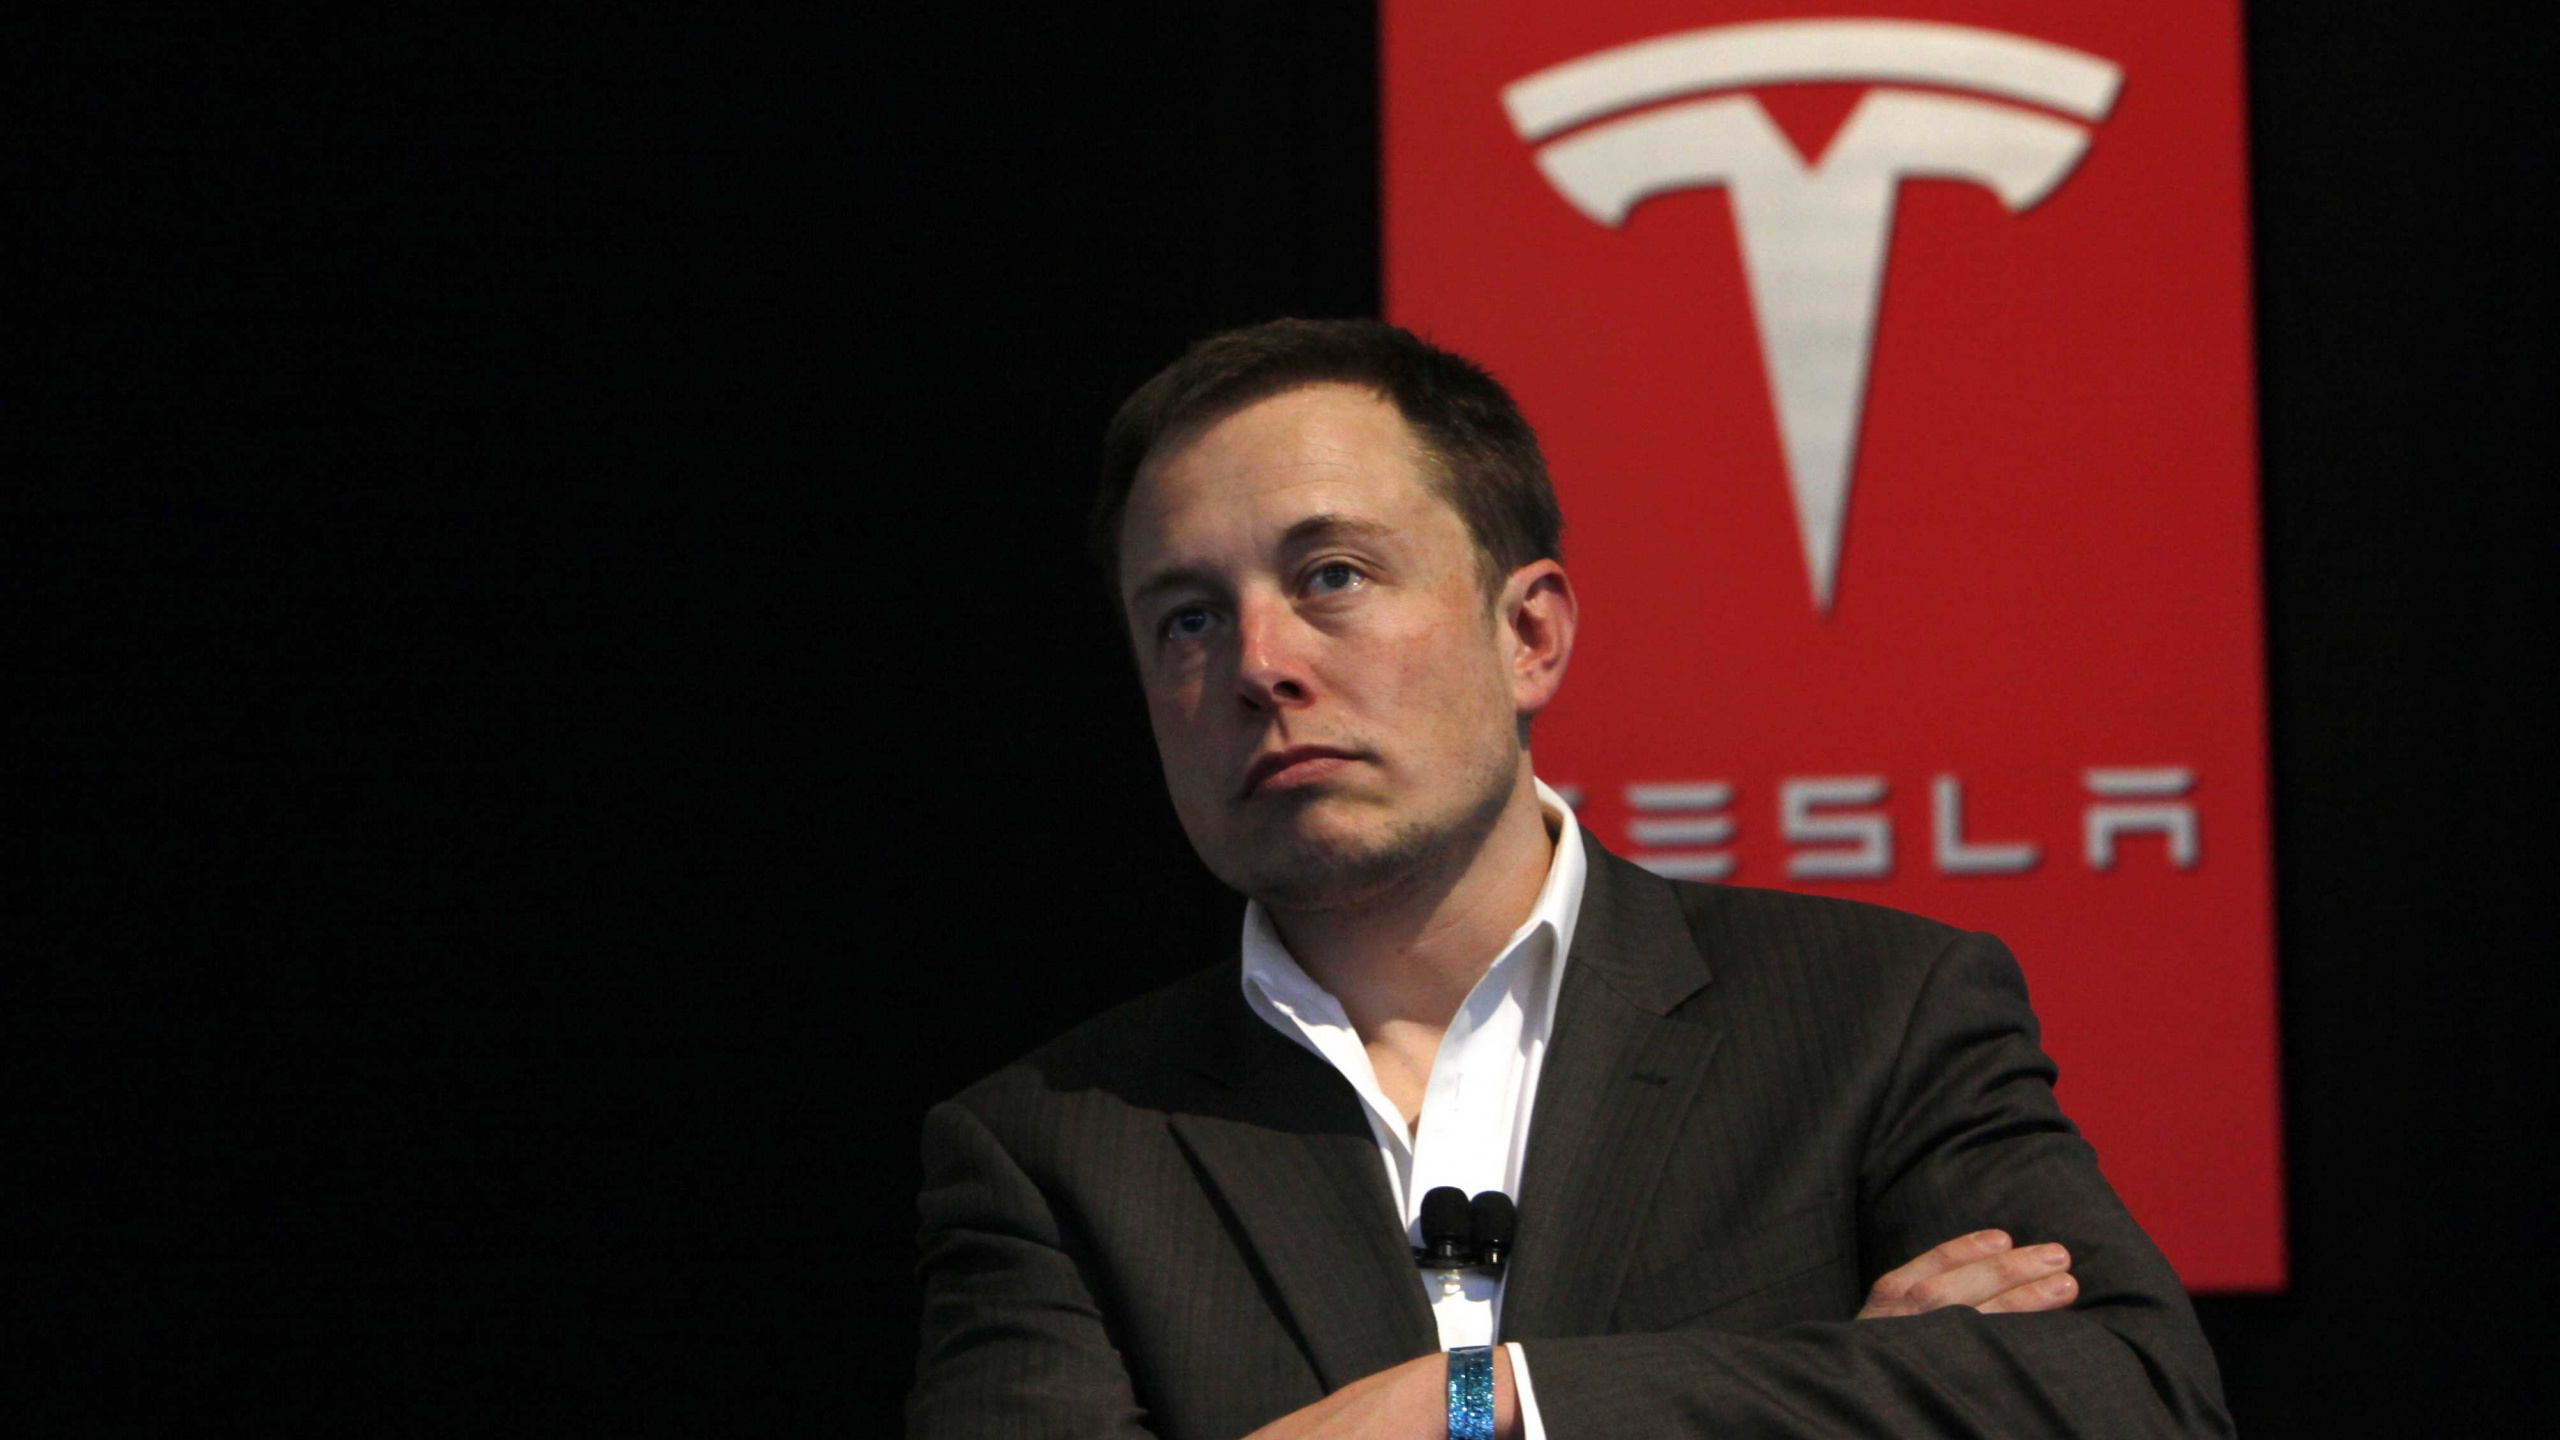 Elon Musk, Tesla Model S, Tesla Model X, Hablar en Público, Discurso. Wallpaper in 2560x1440 Resolution